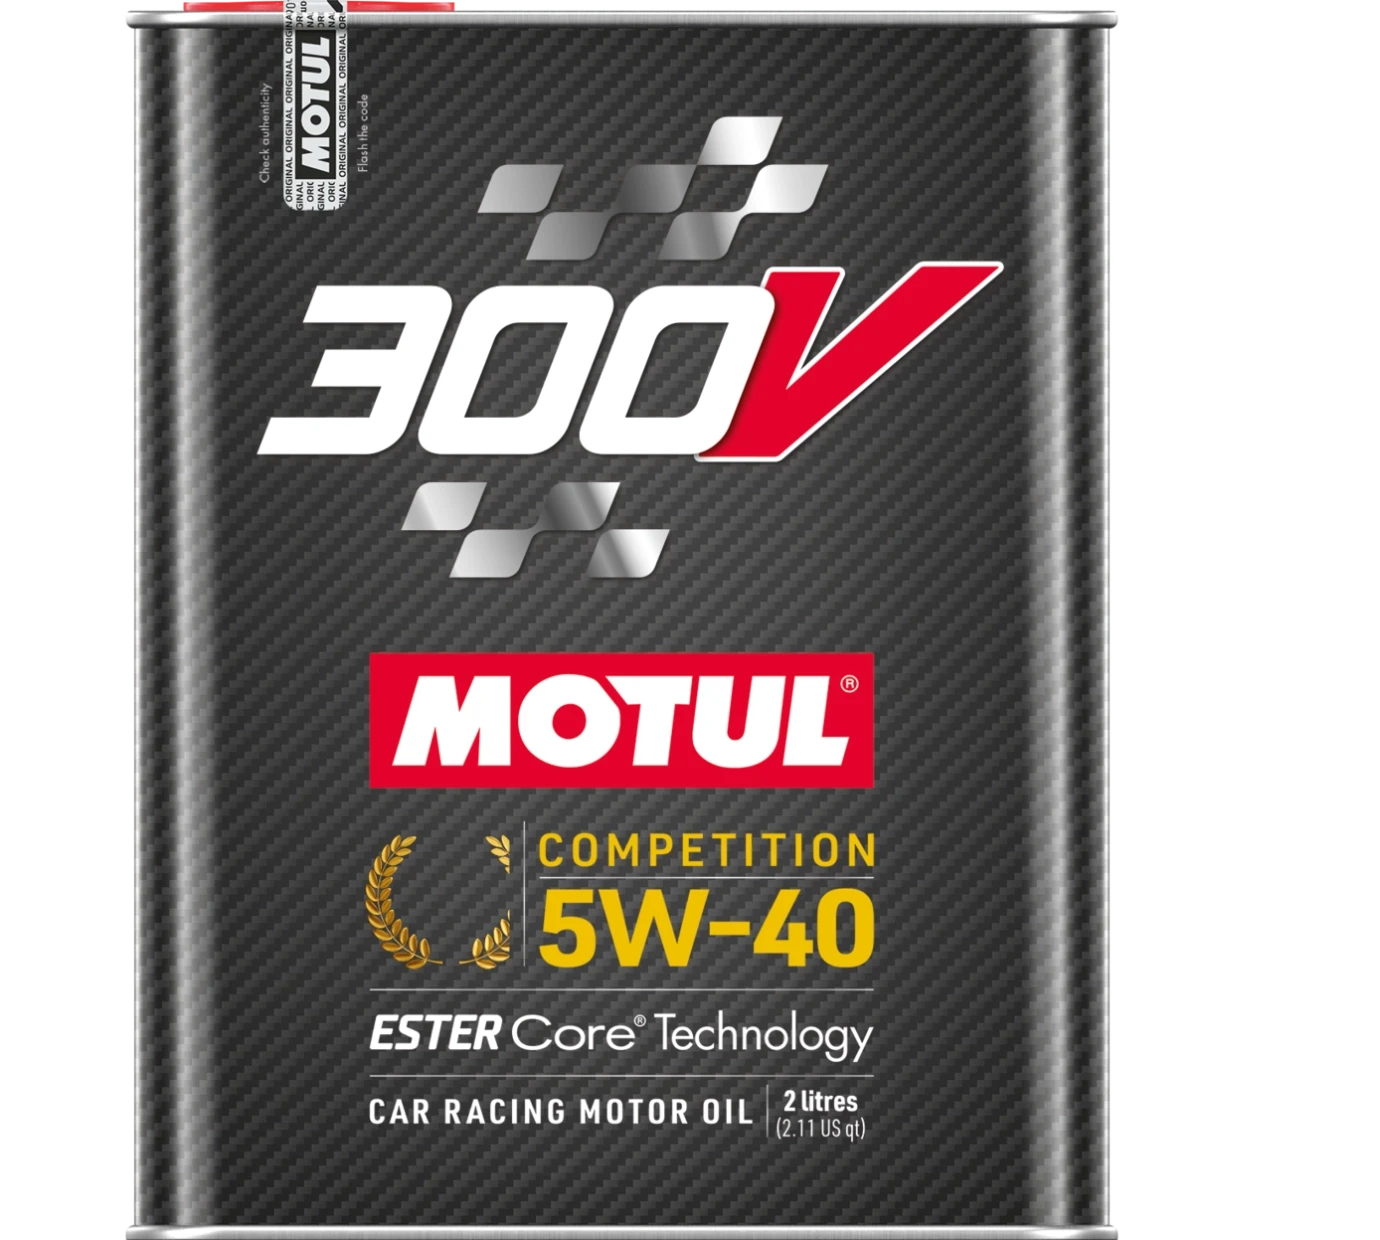 MOTUL 300V COMPETITION 5W-40